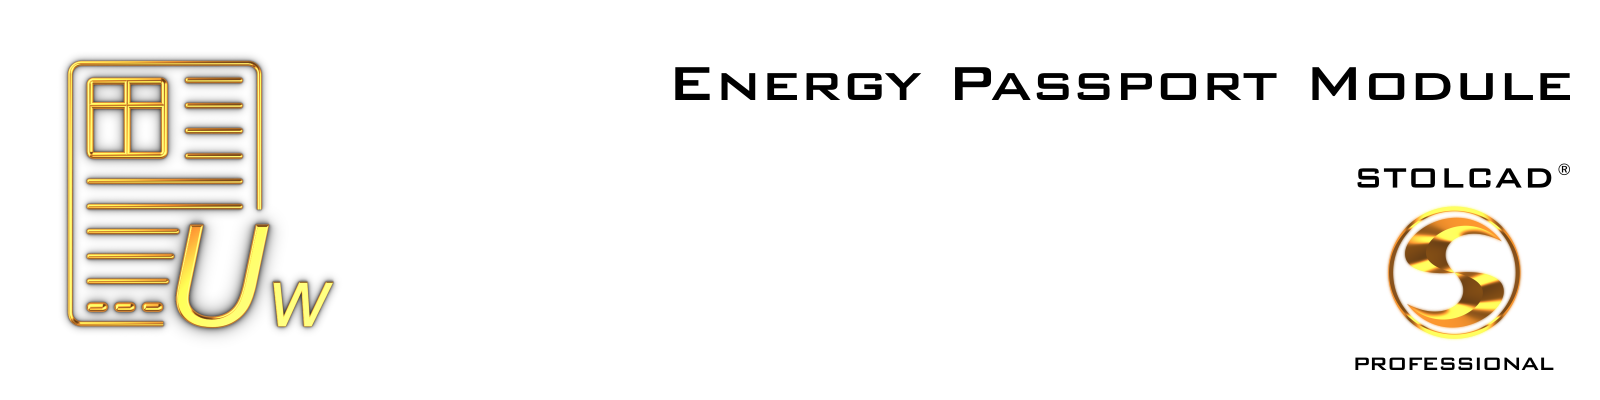 Energy passport module in Stolcad